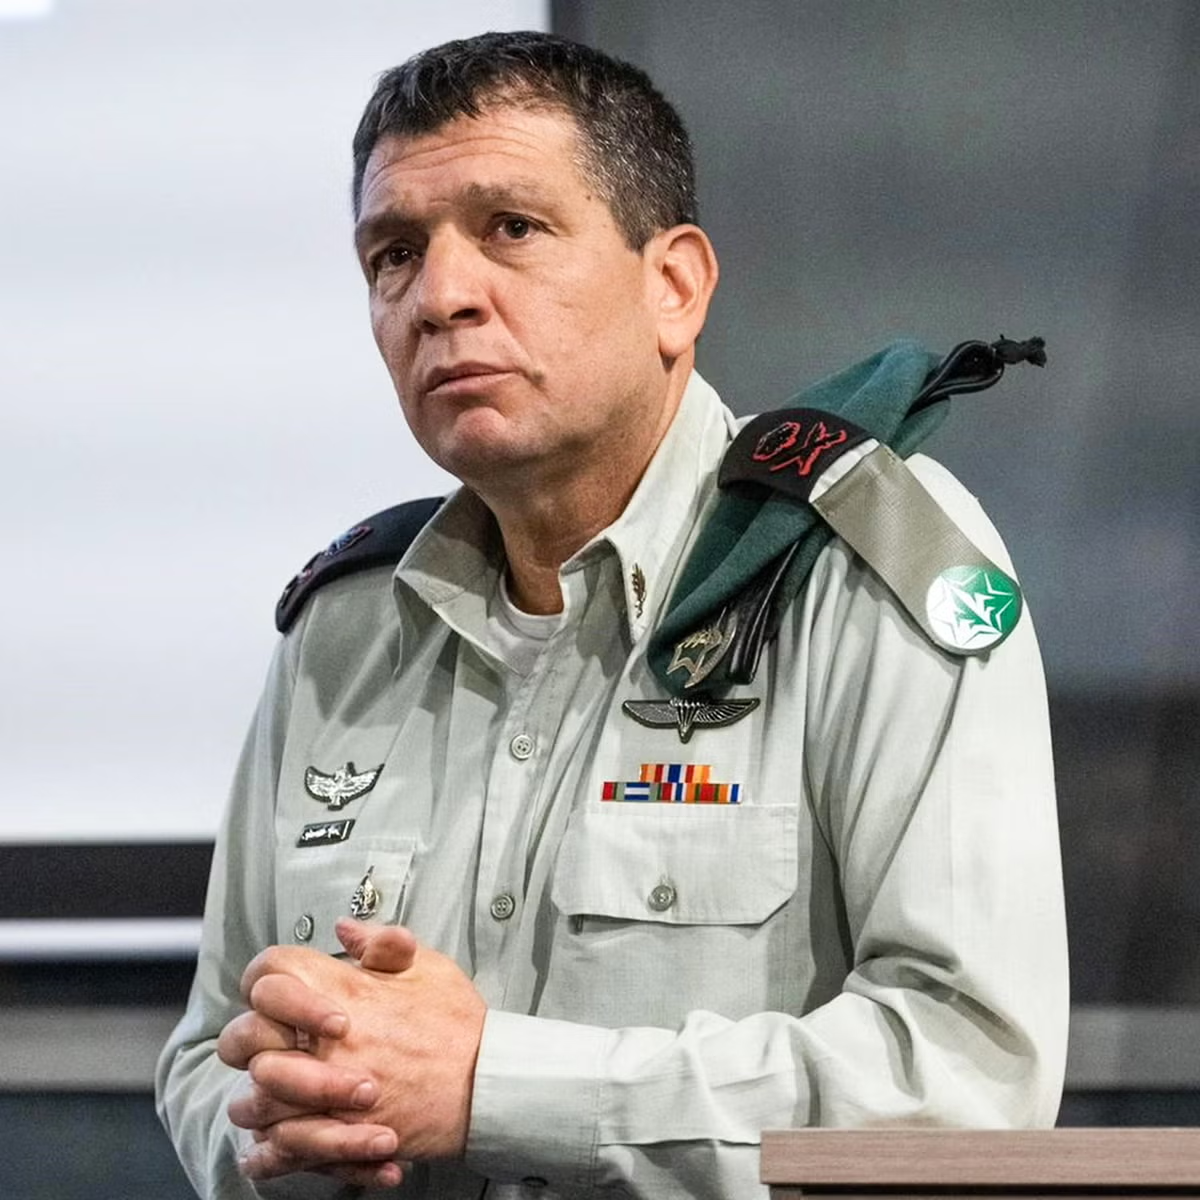 IDF intelligence chief Major General Aharon Haliva resigns after 7 October attack